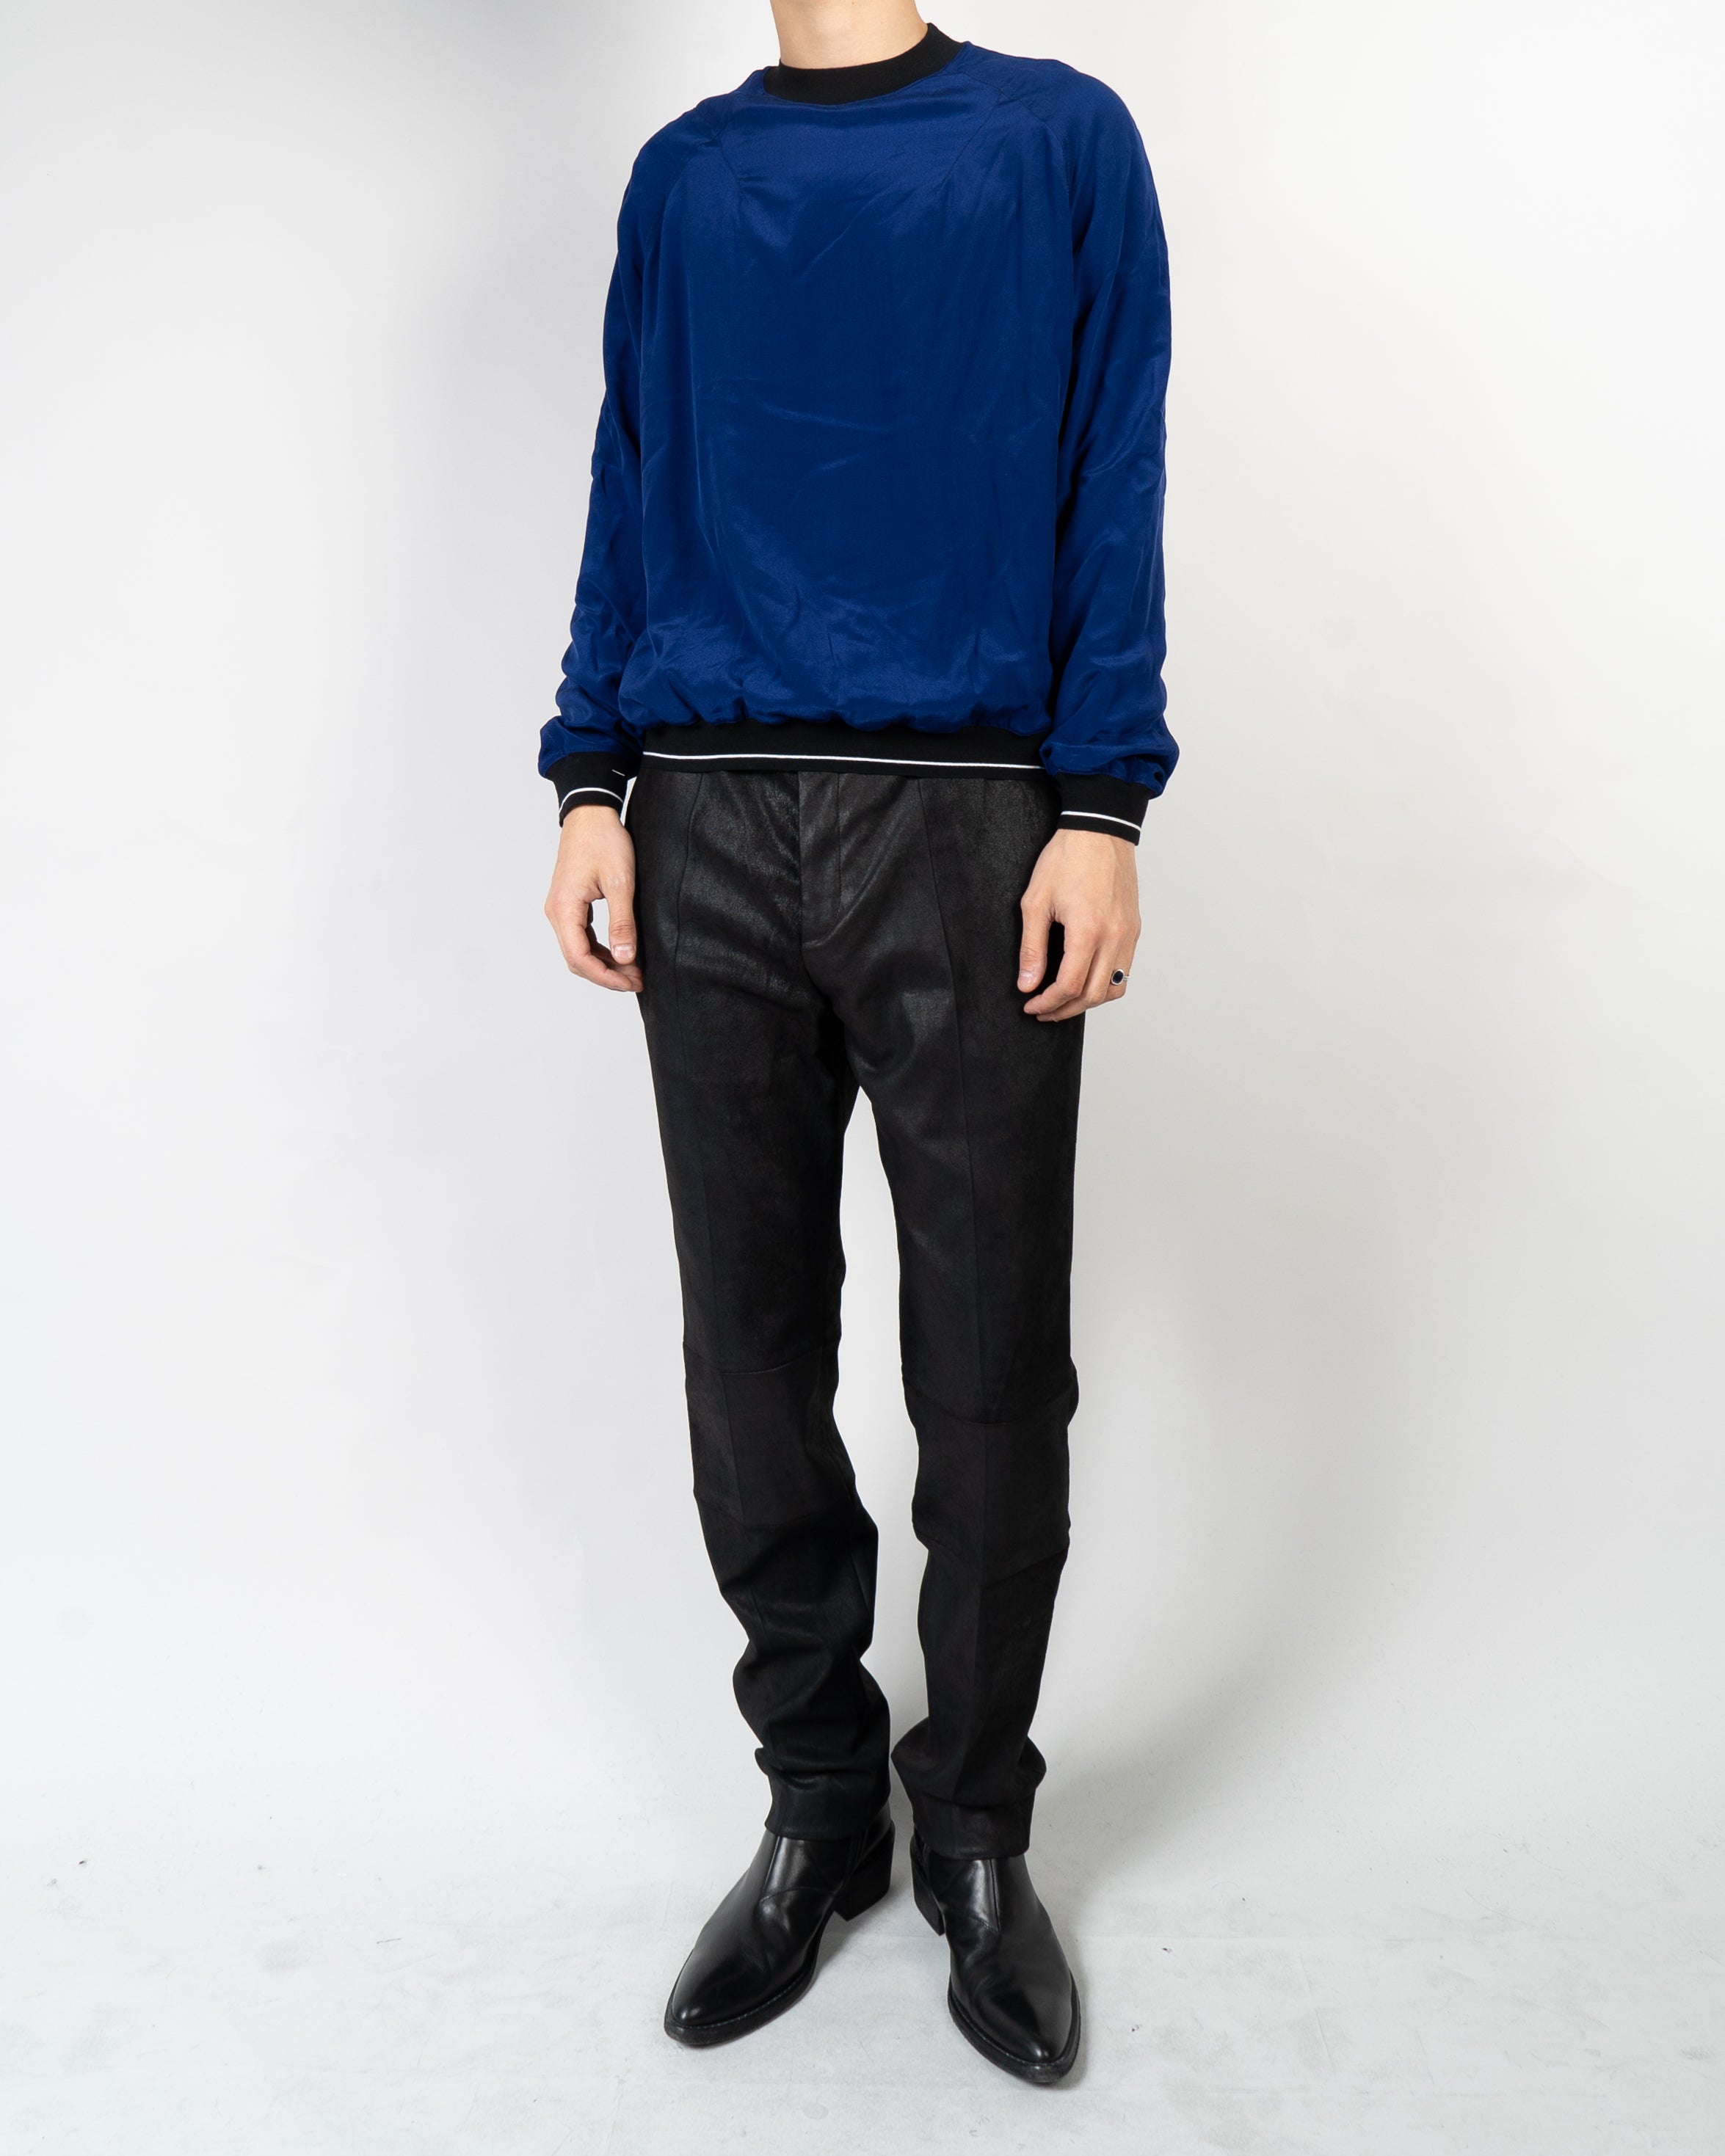 SS18 Royal Blue Silk Sweatshirt